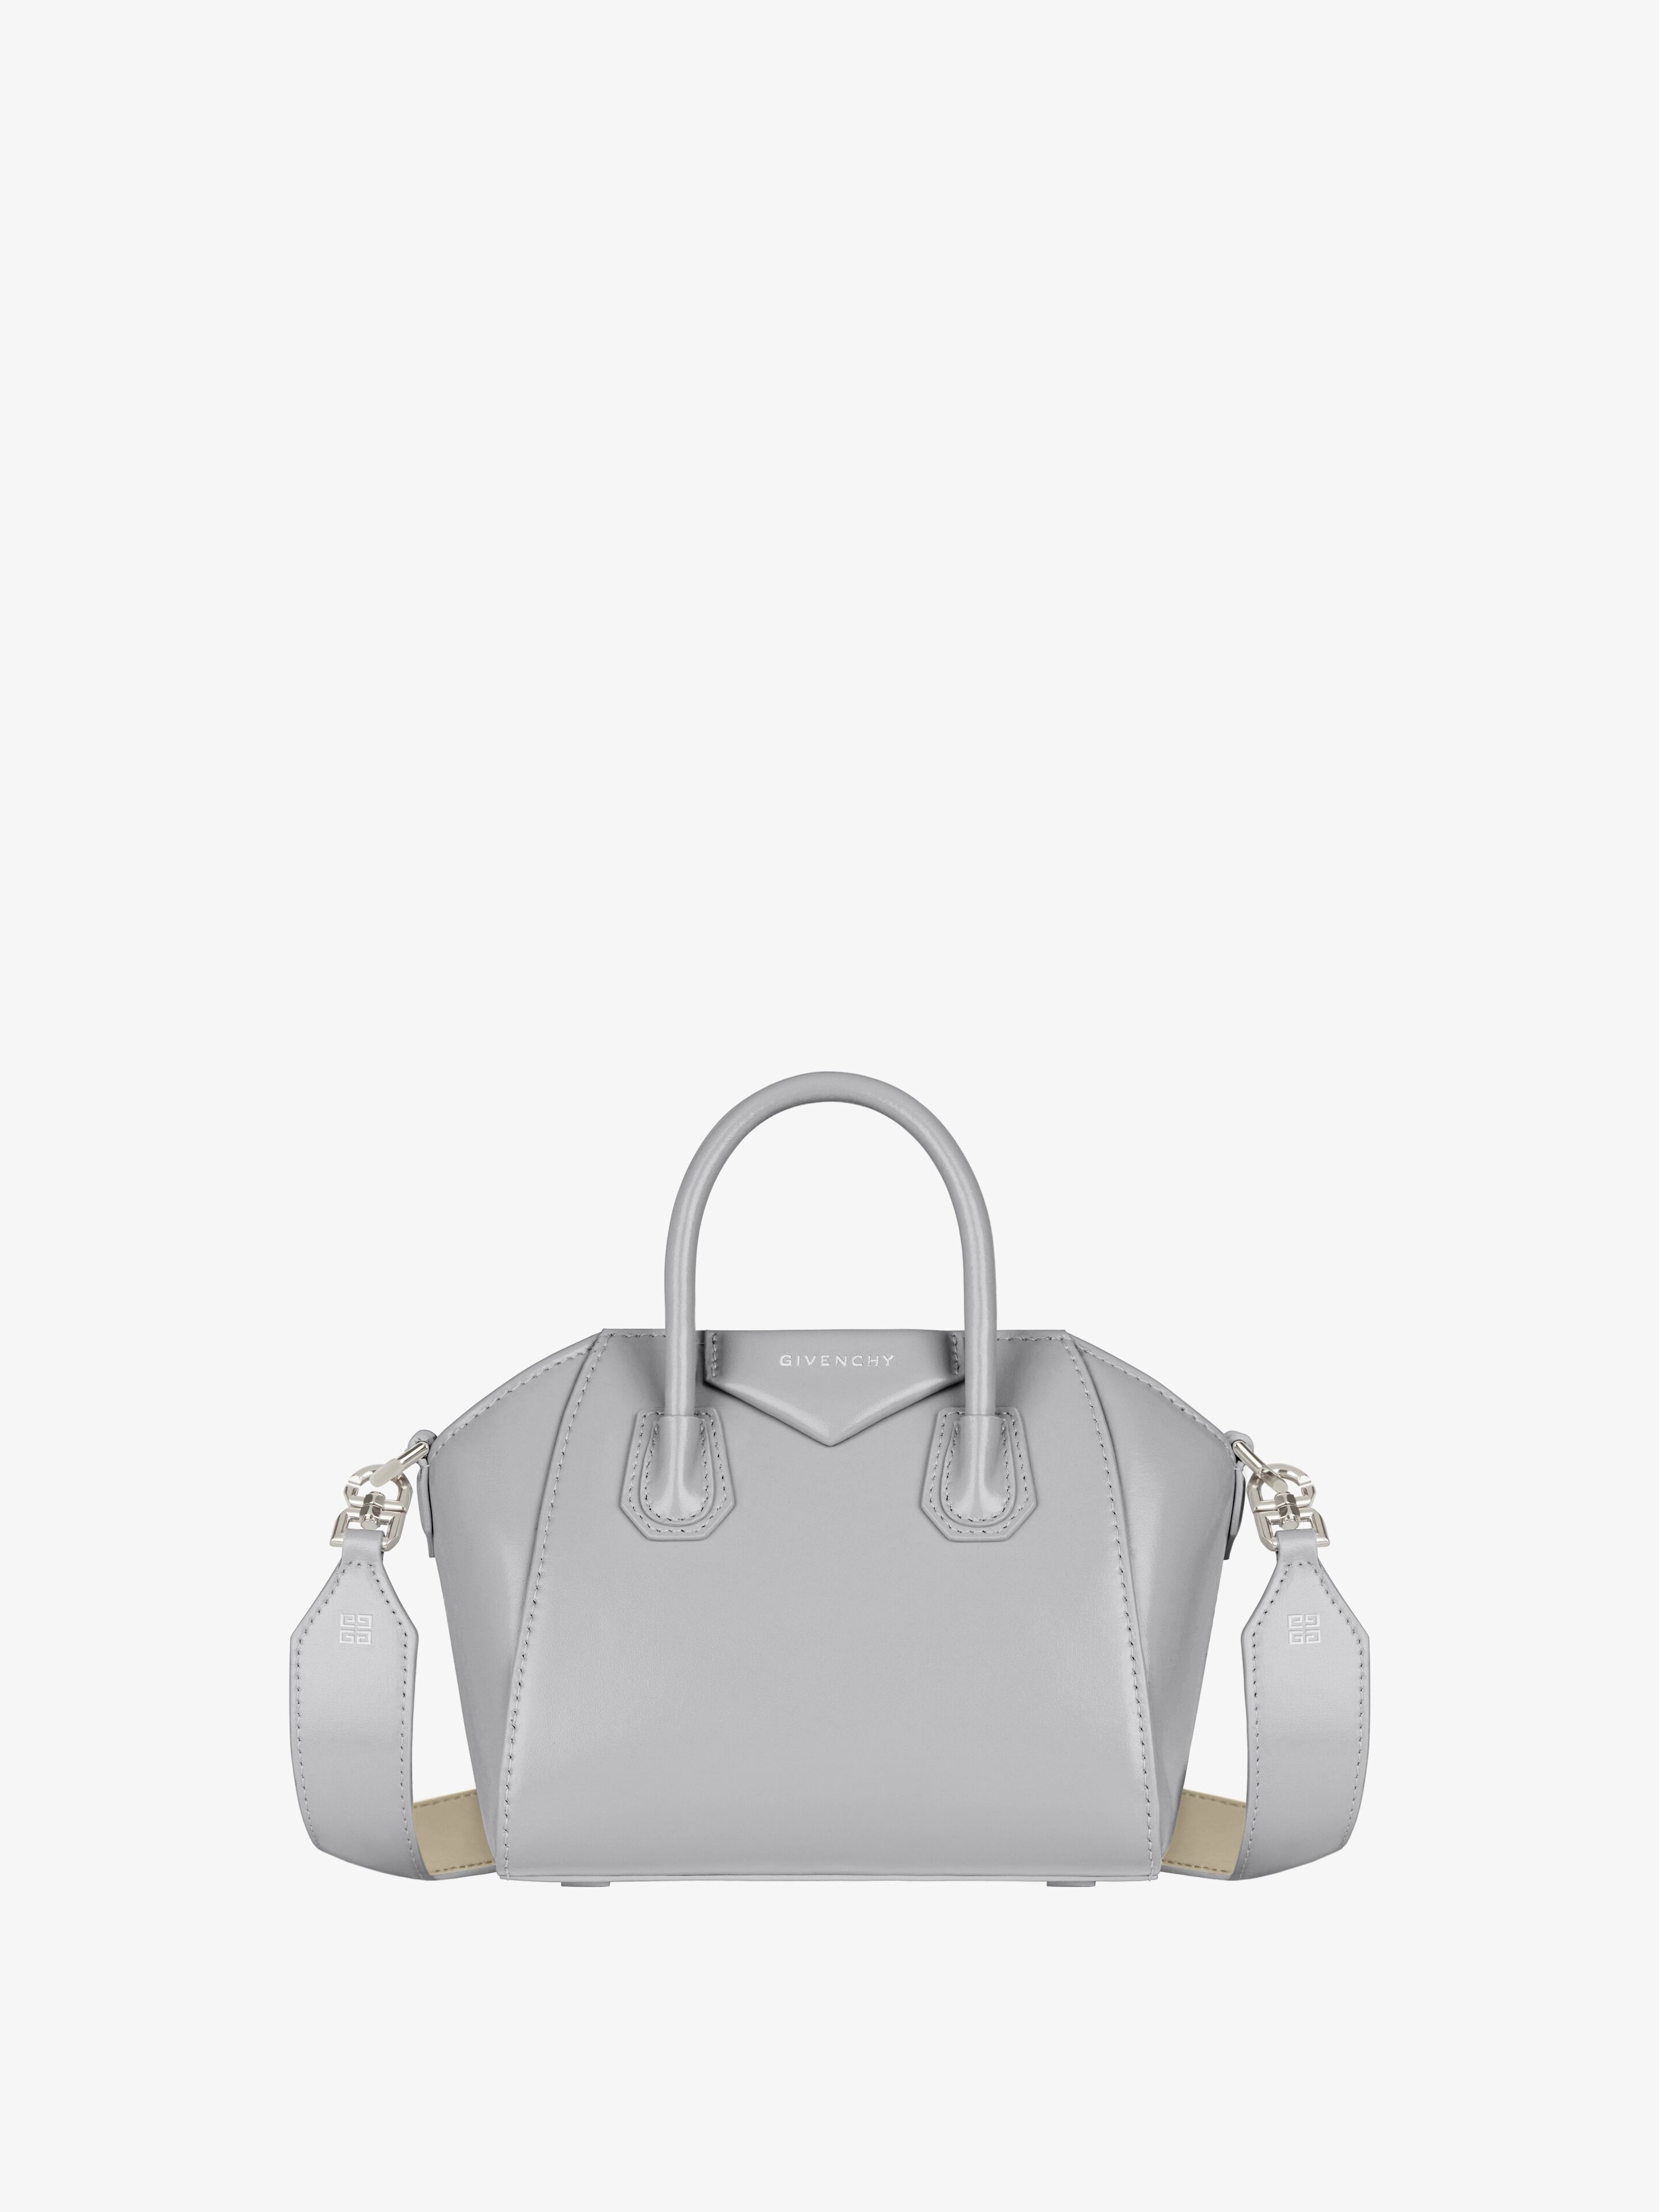 Givenchy Women's Antigona Toy Crossbody Bag In Light Grey